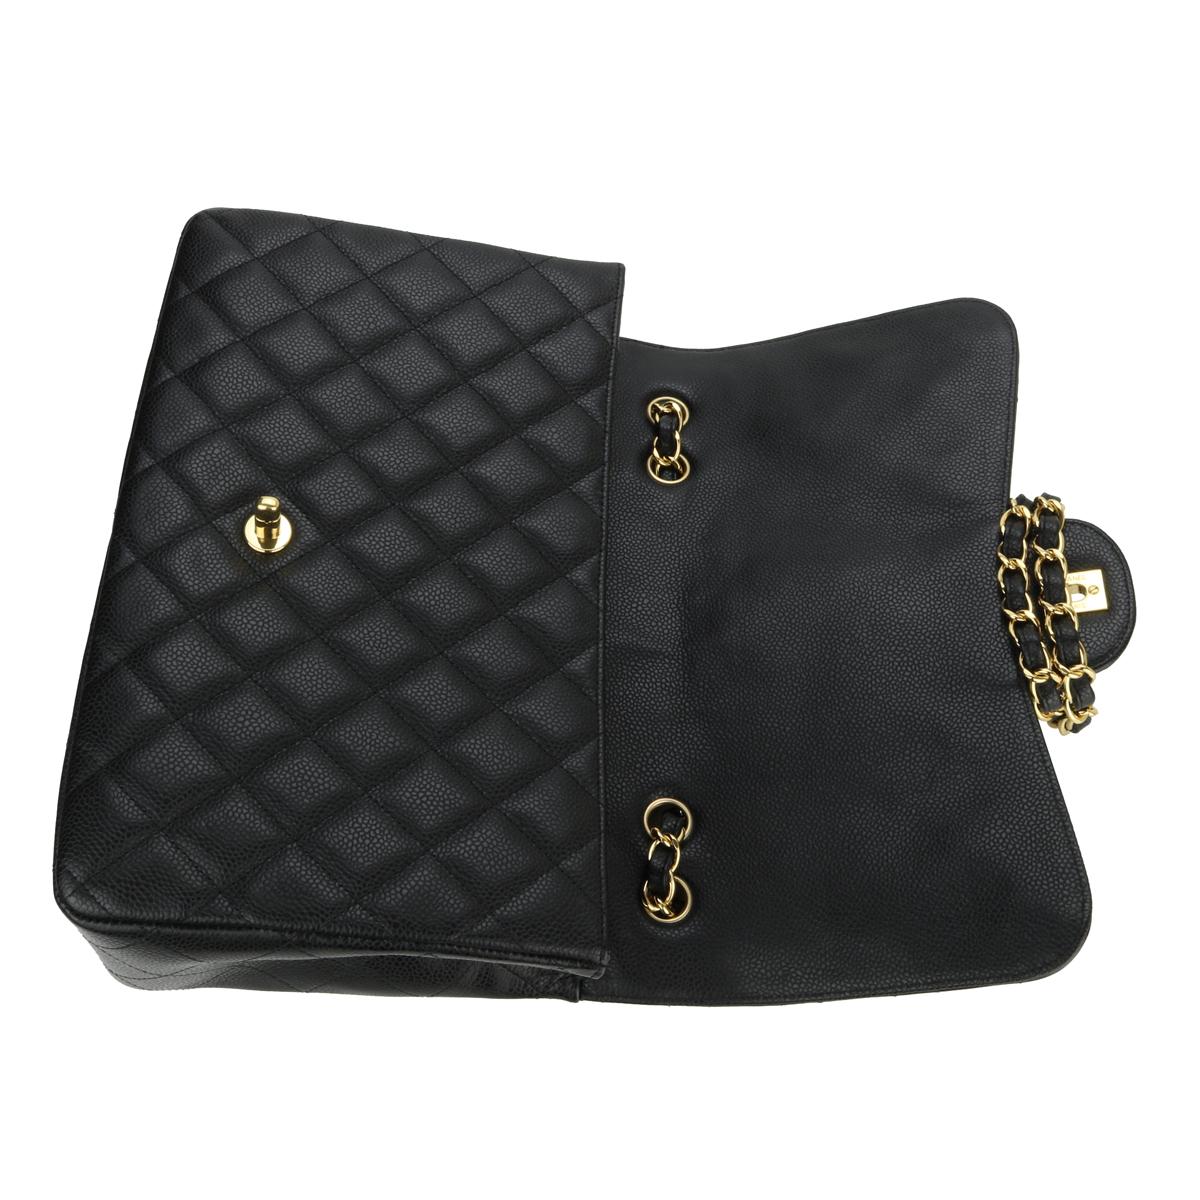 CHANEL Single Flap Jumbo Bag Black Caviar with Gold Hardware 2010 For Sale 9